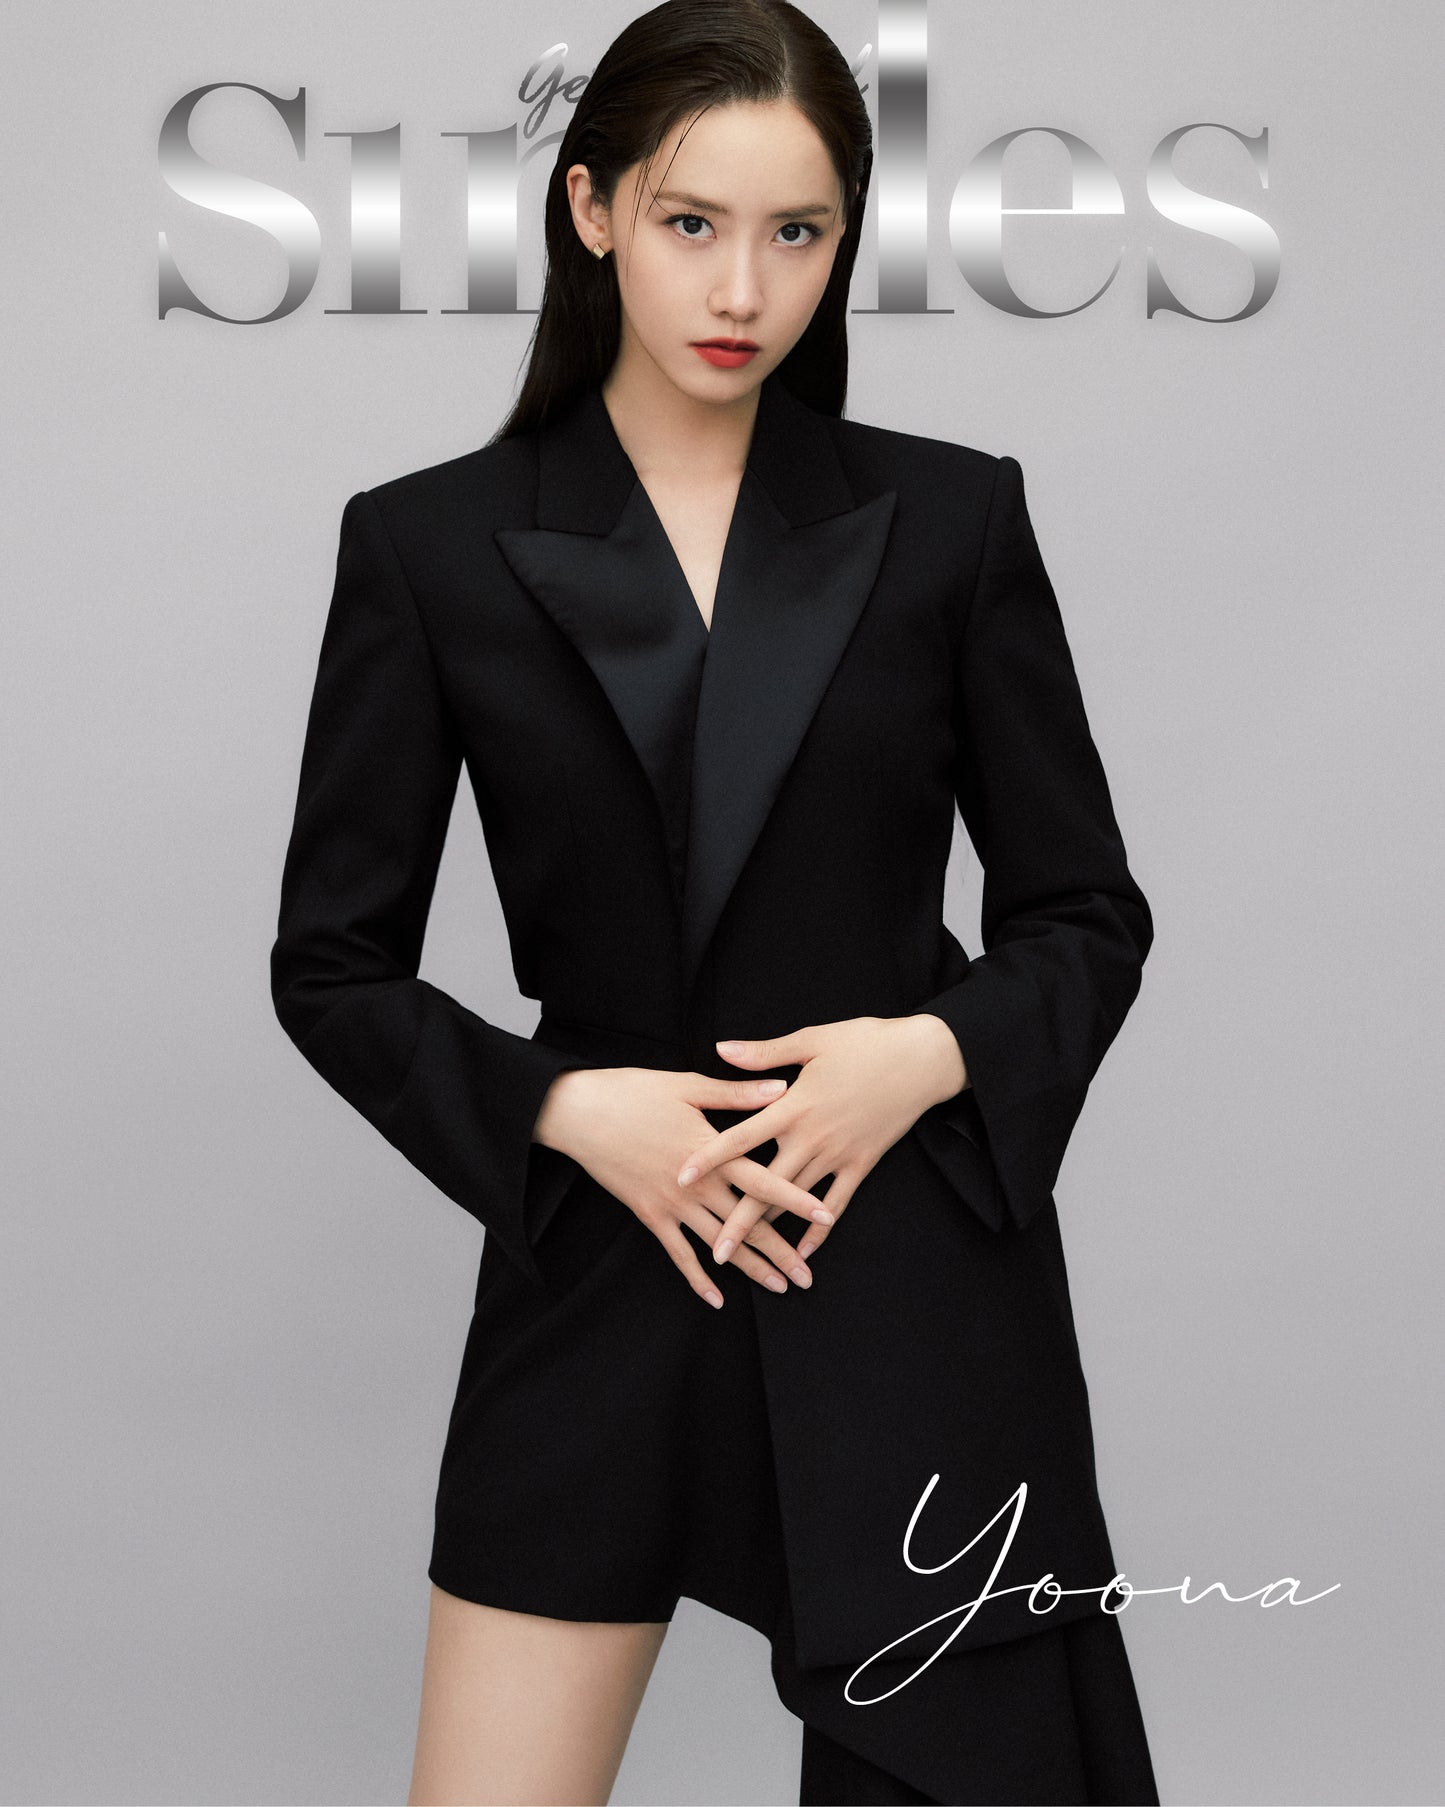 Singles | 2023 MAY. | SNSD YOONA COVER